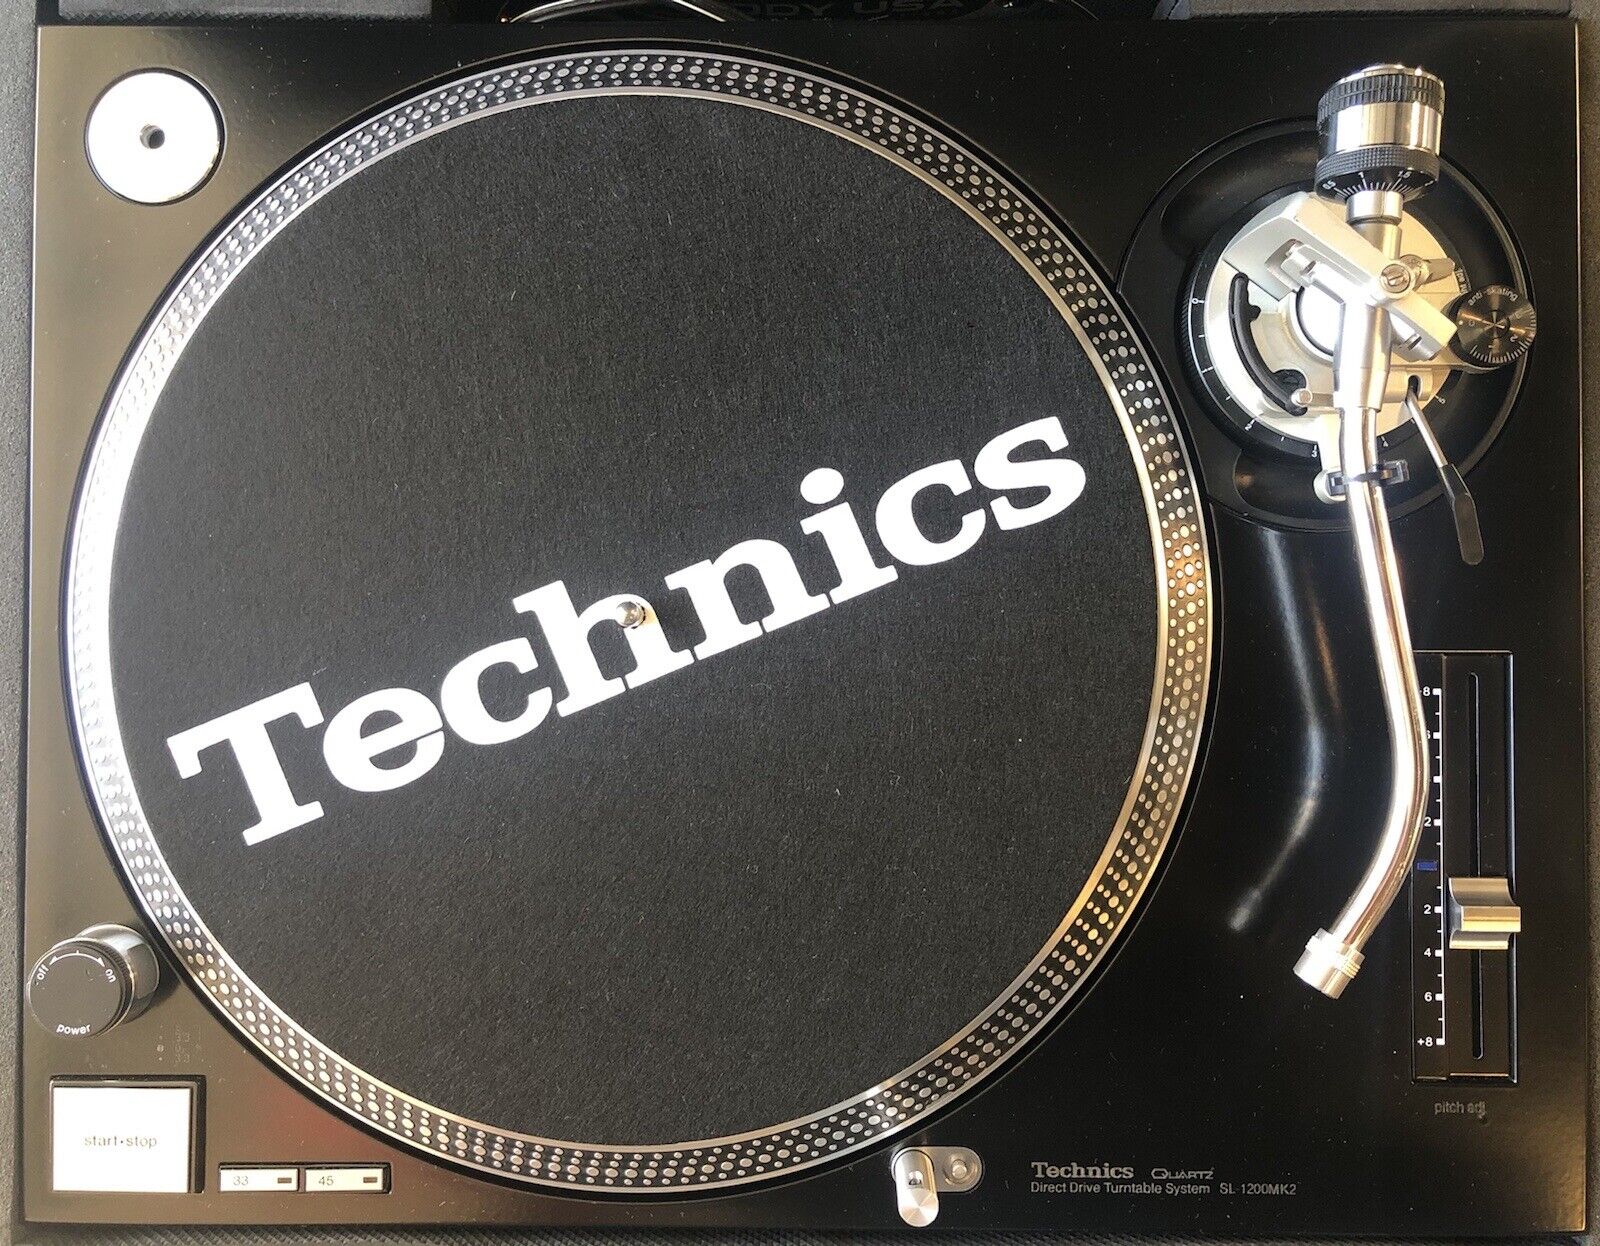 DJ Slipmat Technics classic white on black - 1200 or any turntable record vinyl